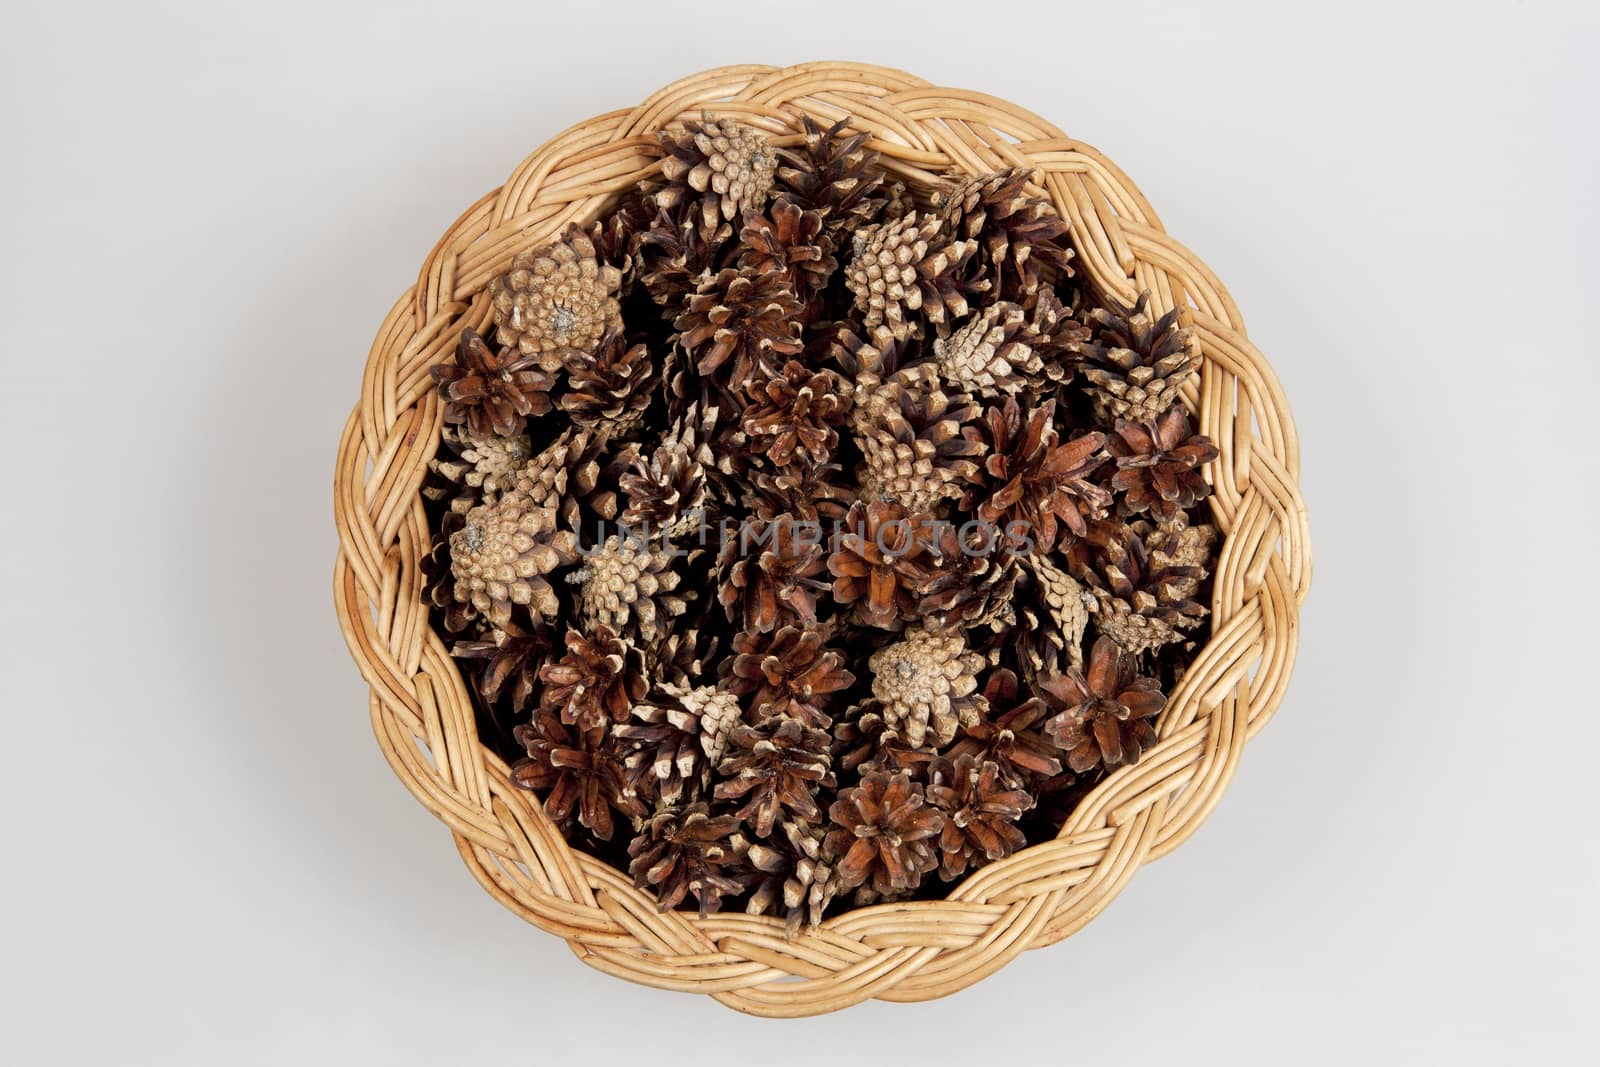 Pine cones in a basket. by sergey_pankin